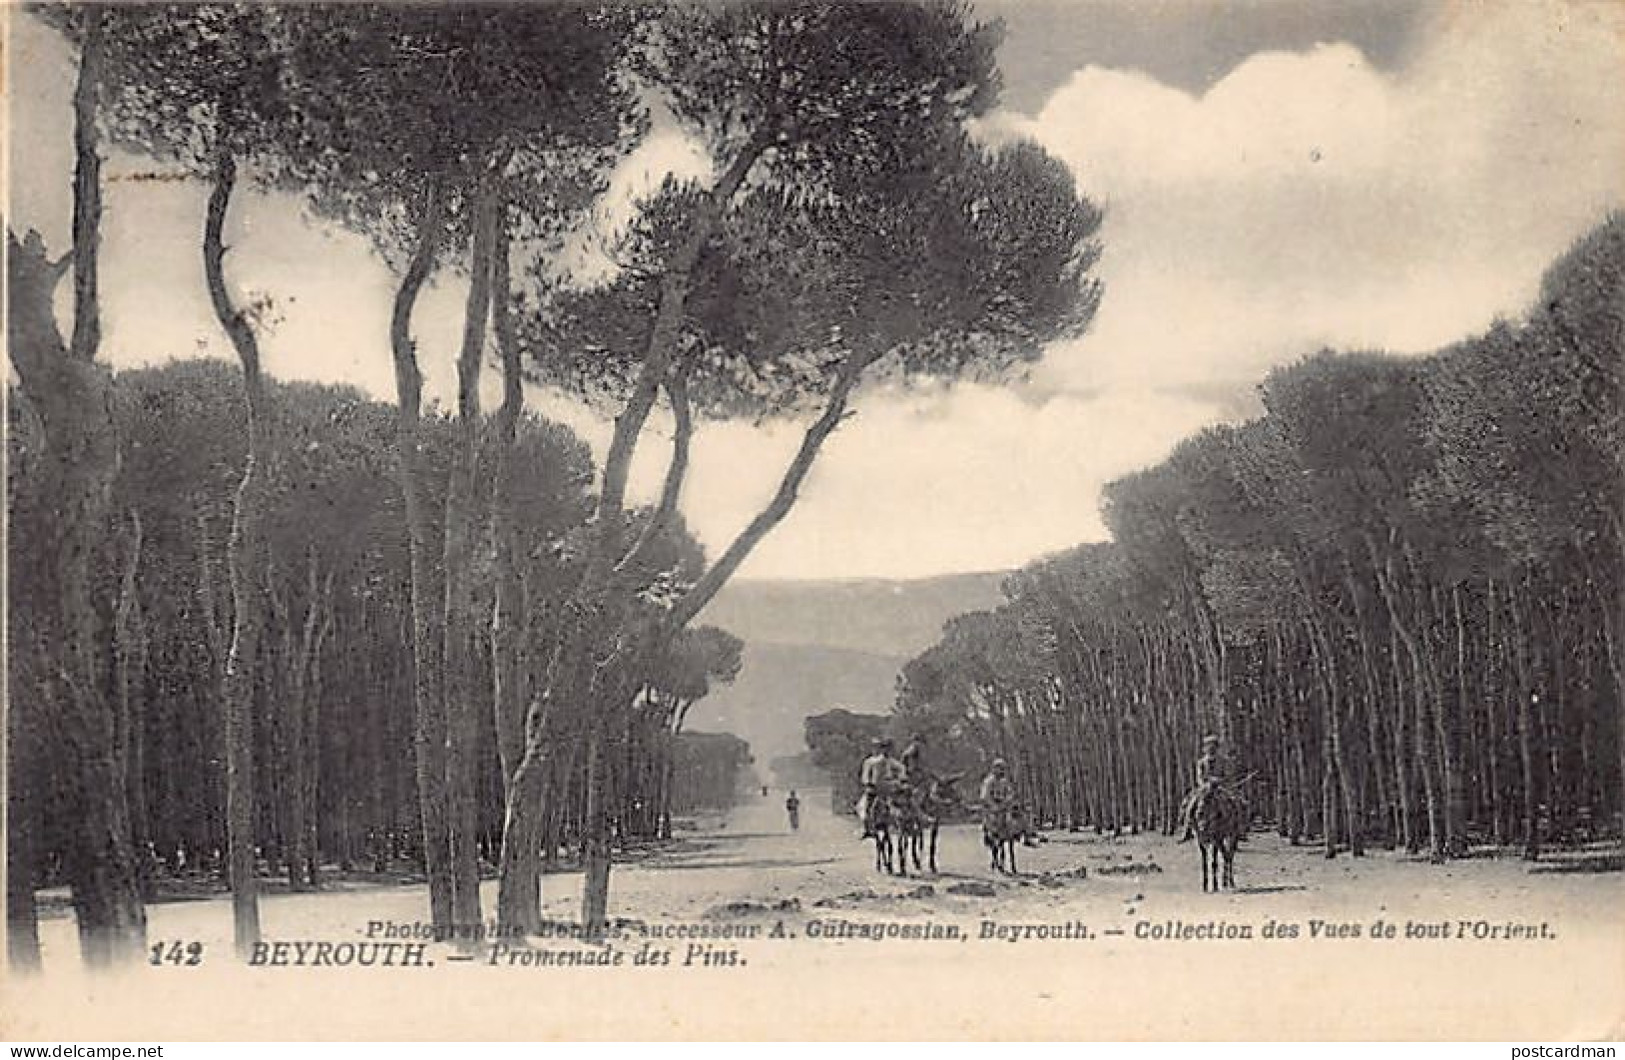 Liban - BEYROUTH - Promenade Des Pins - Ed. Photographie Bonfils, Successeur A. Guiragossian 142 - Libanon